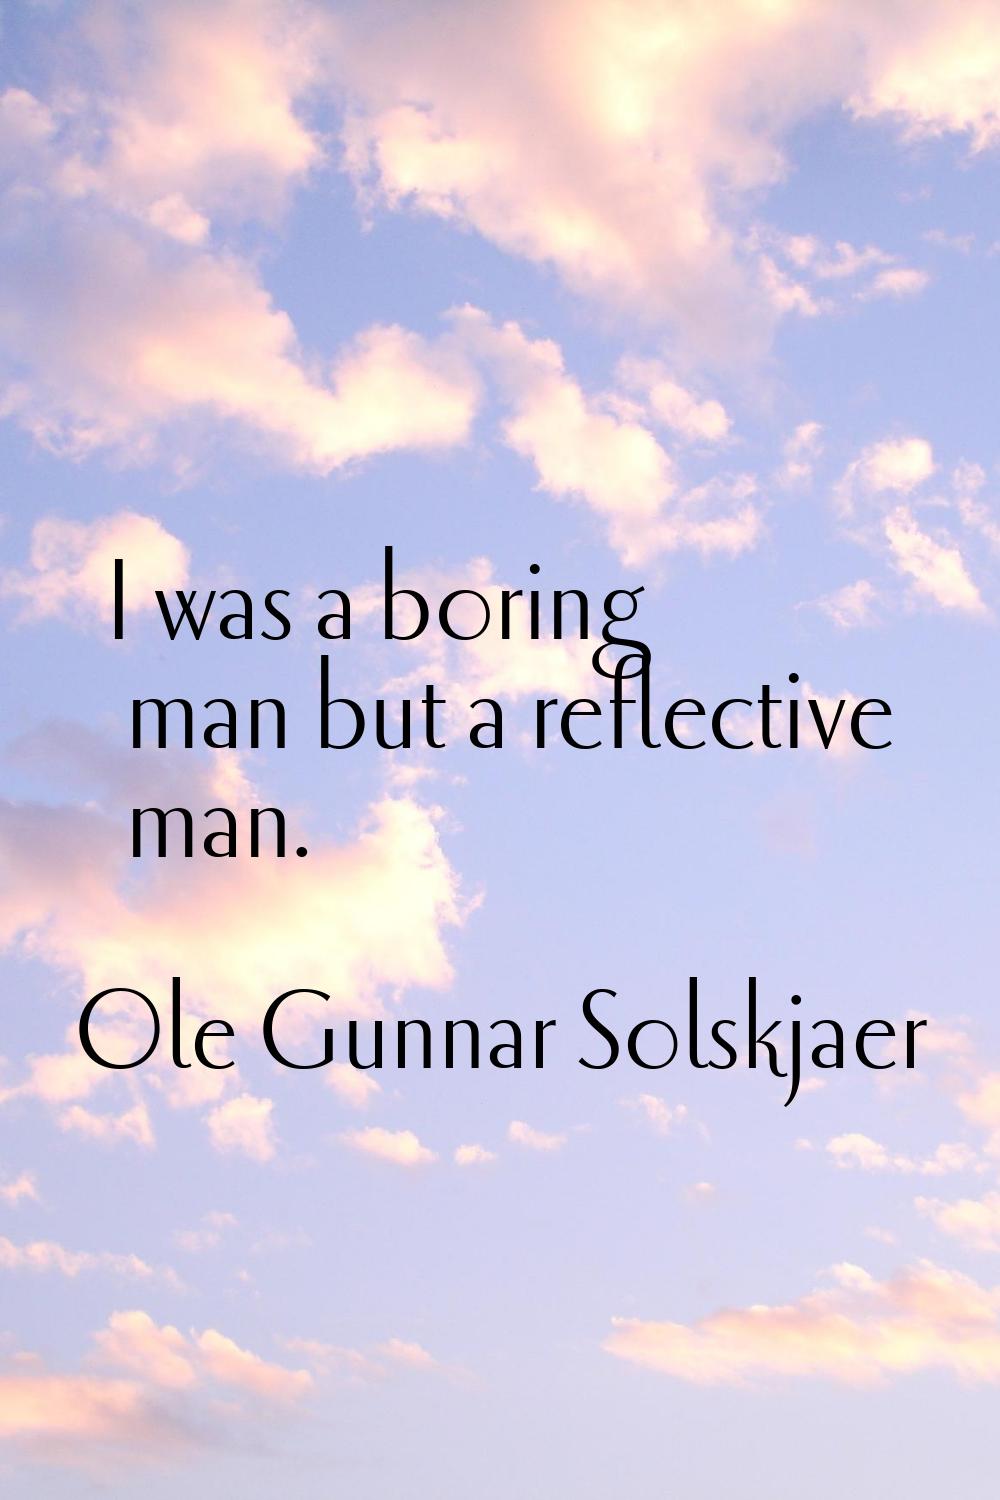 I was a boring man but a reflective man.